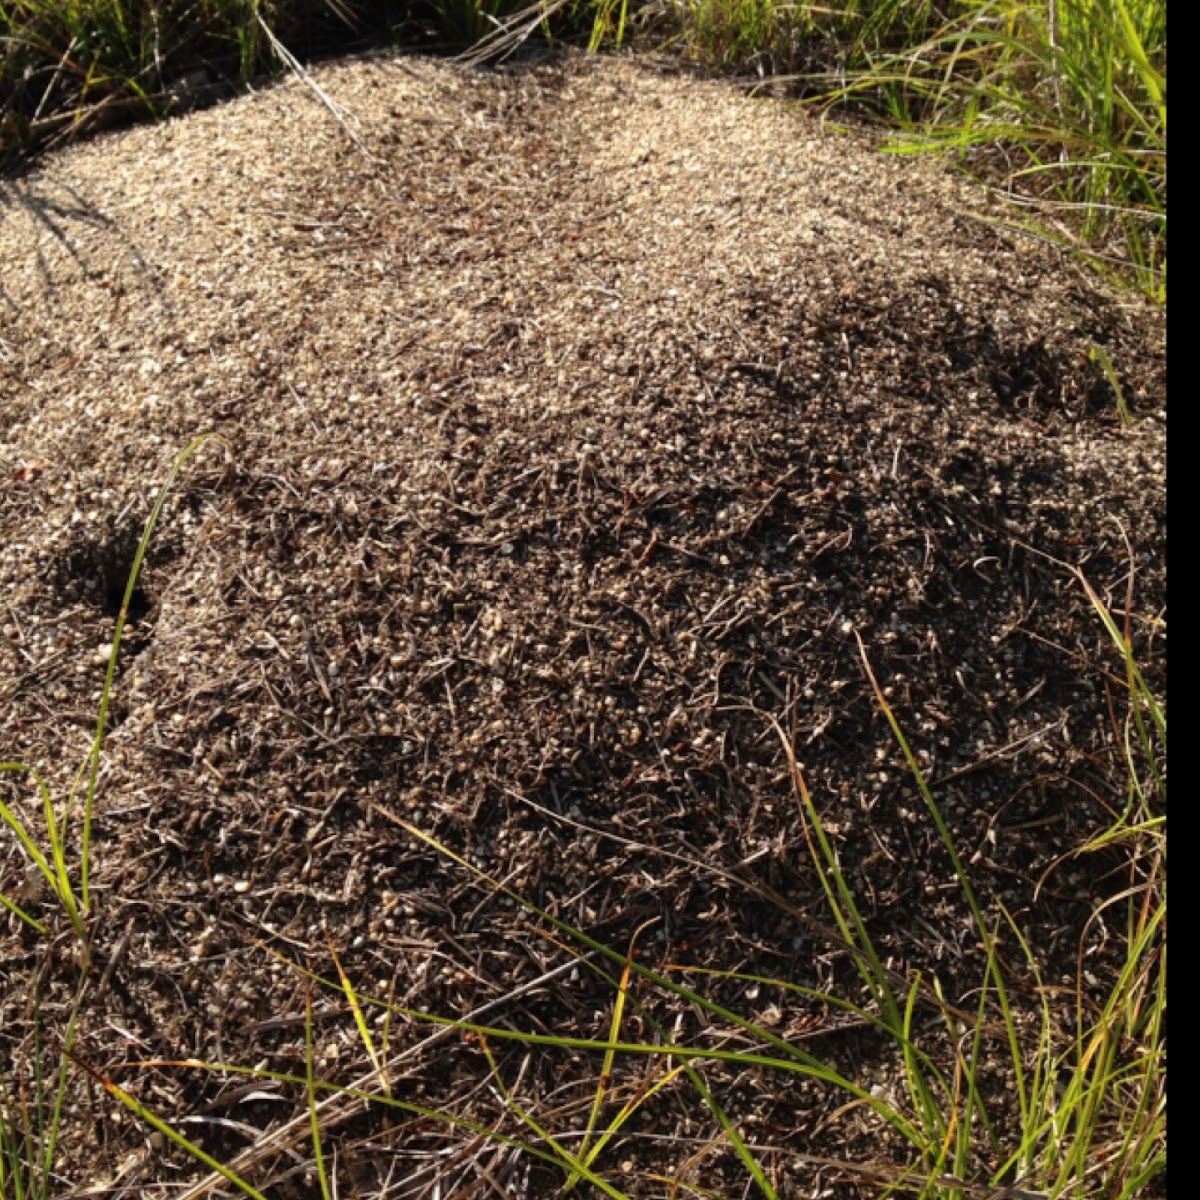 Field ant mound